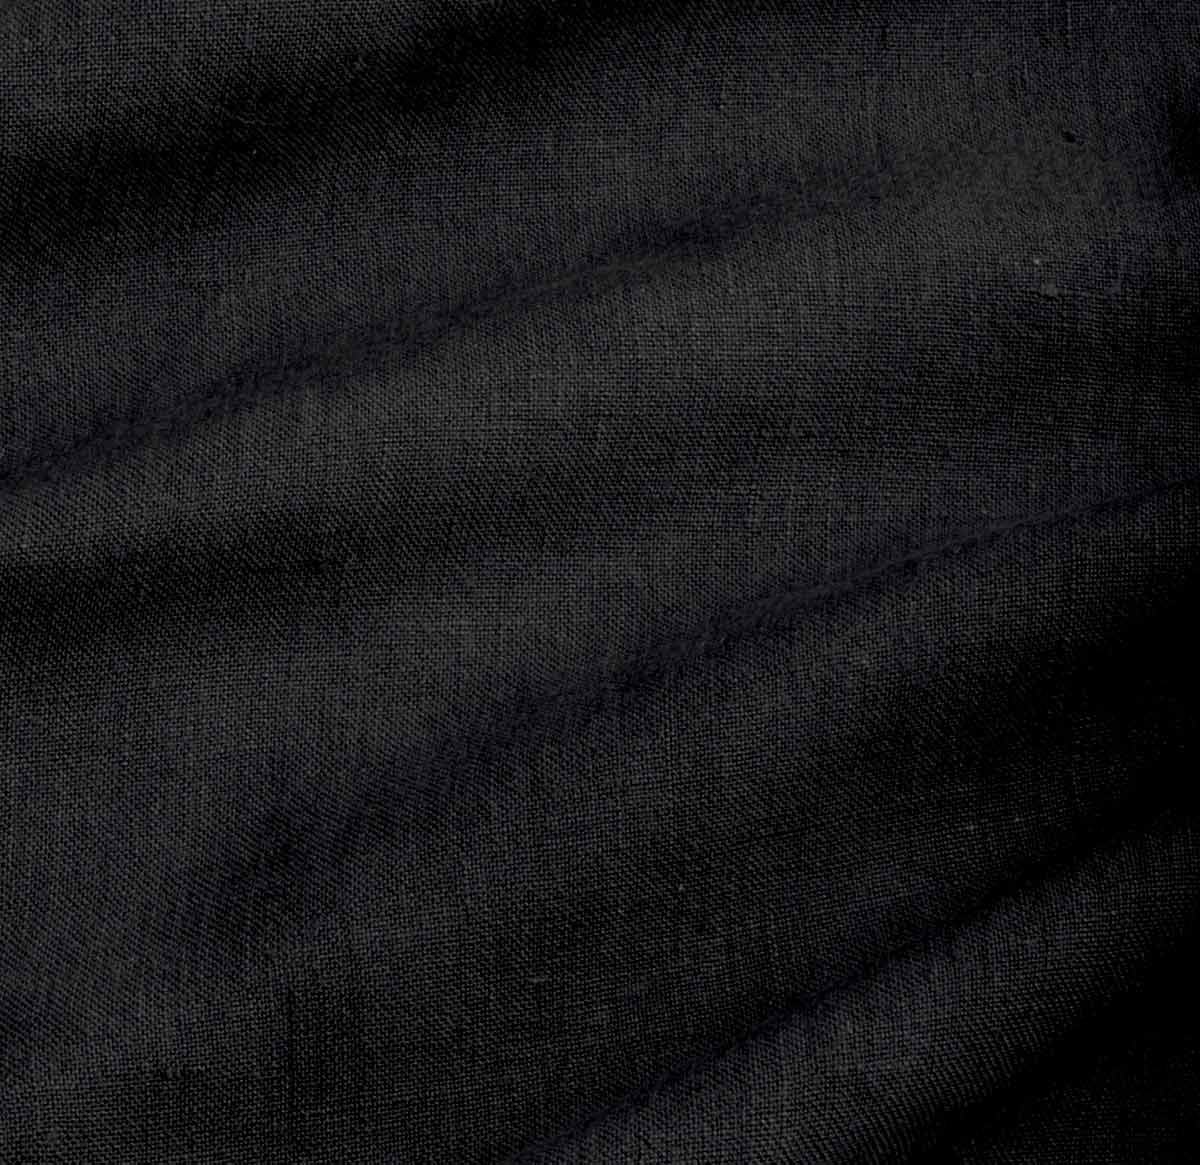 Black fine woven hemp fabric